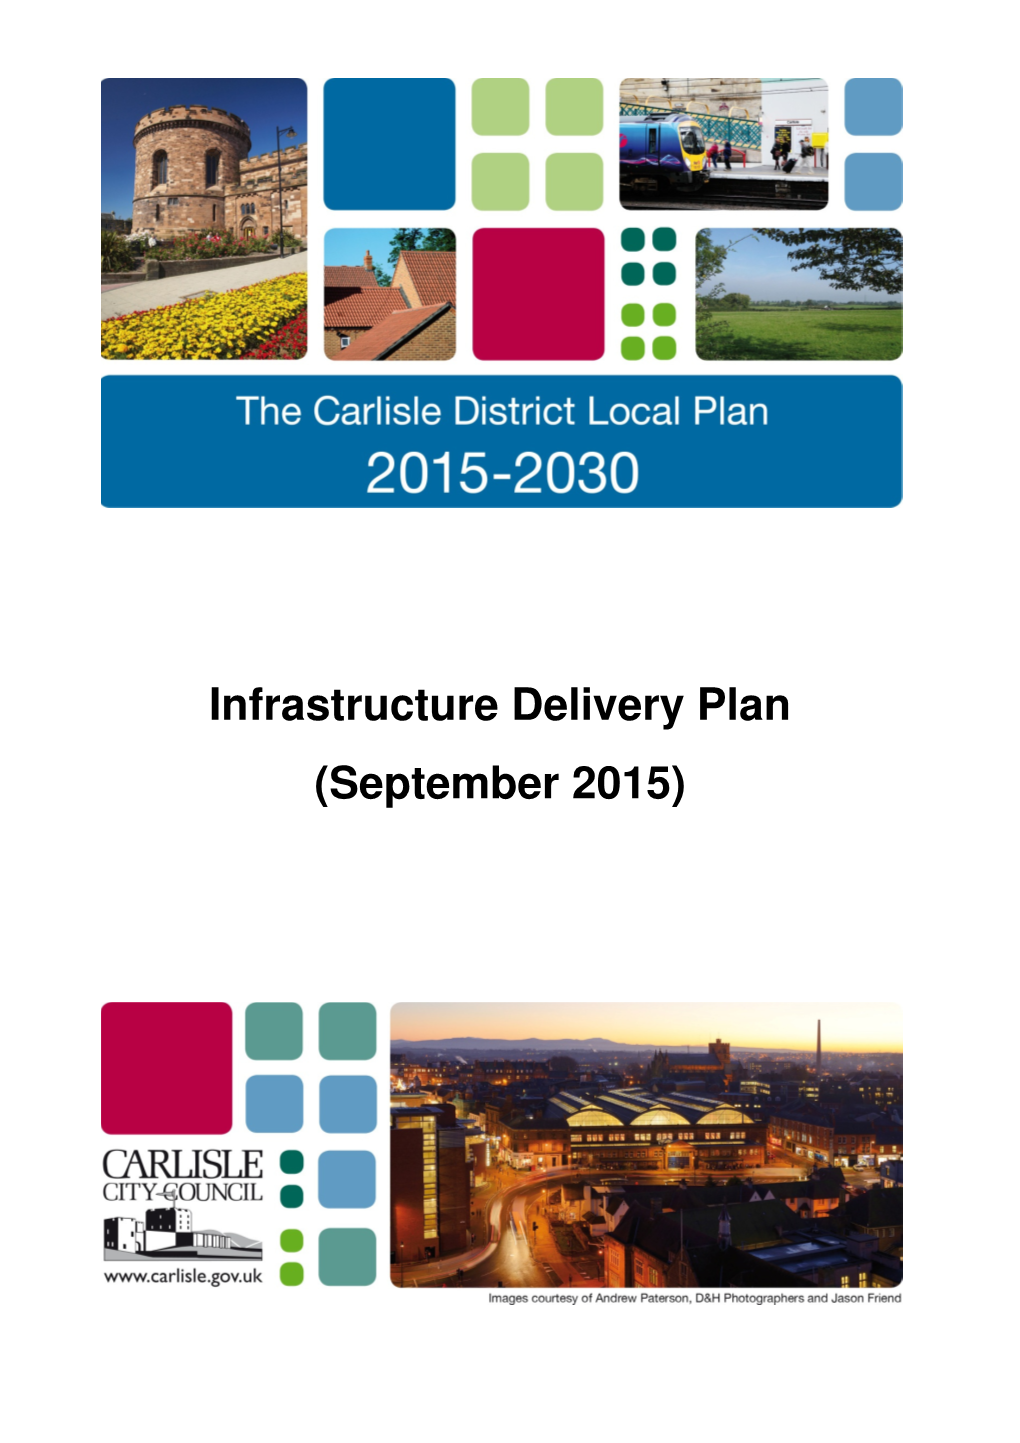 Infrastructure Delivery Plan (September 2015)